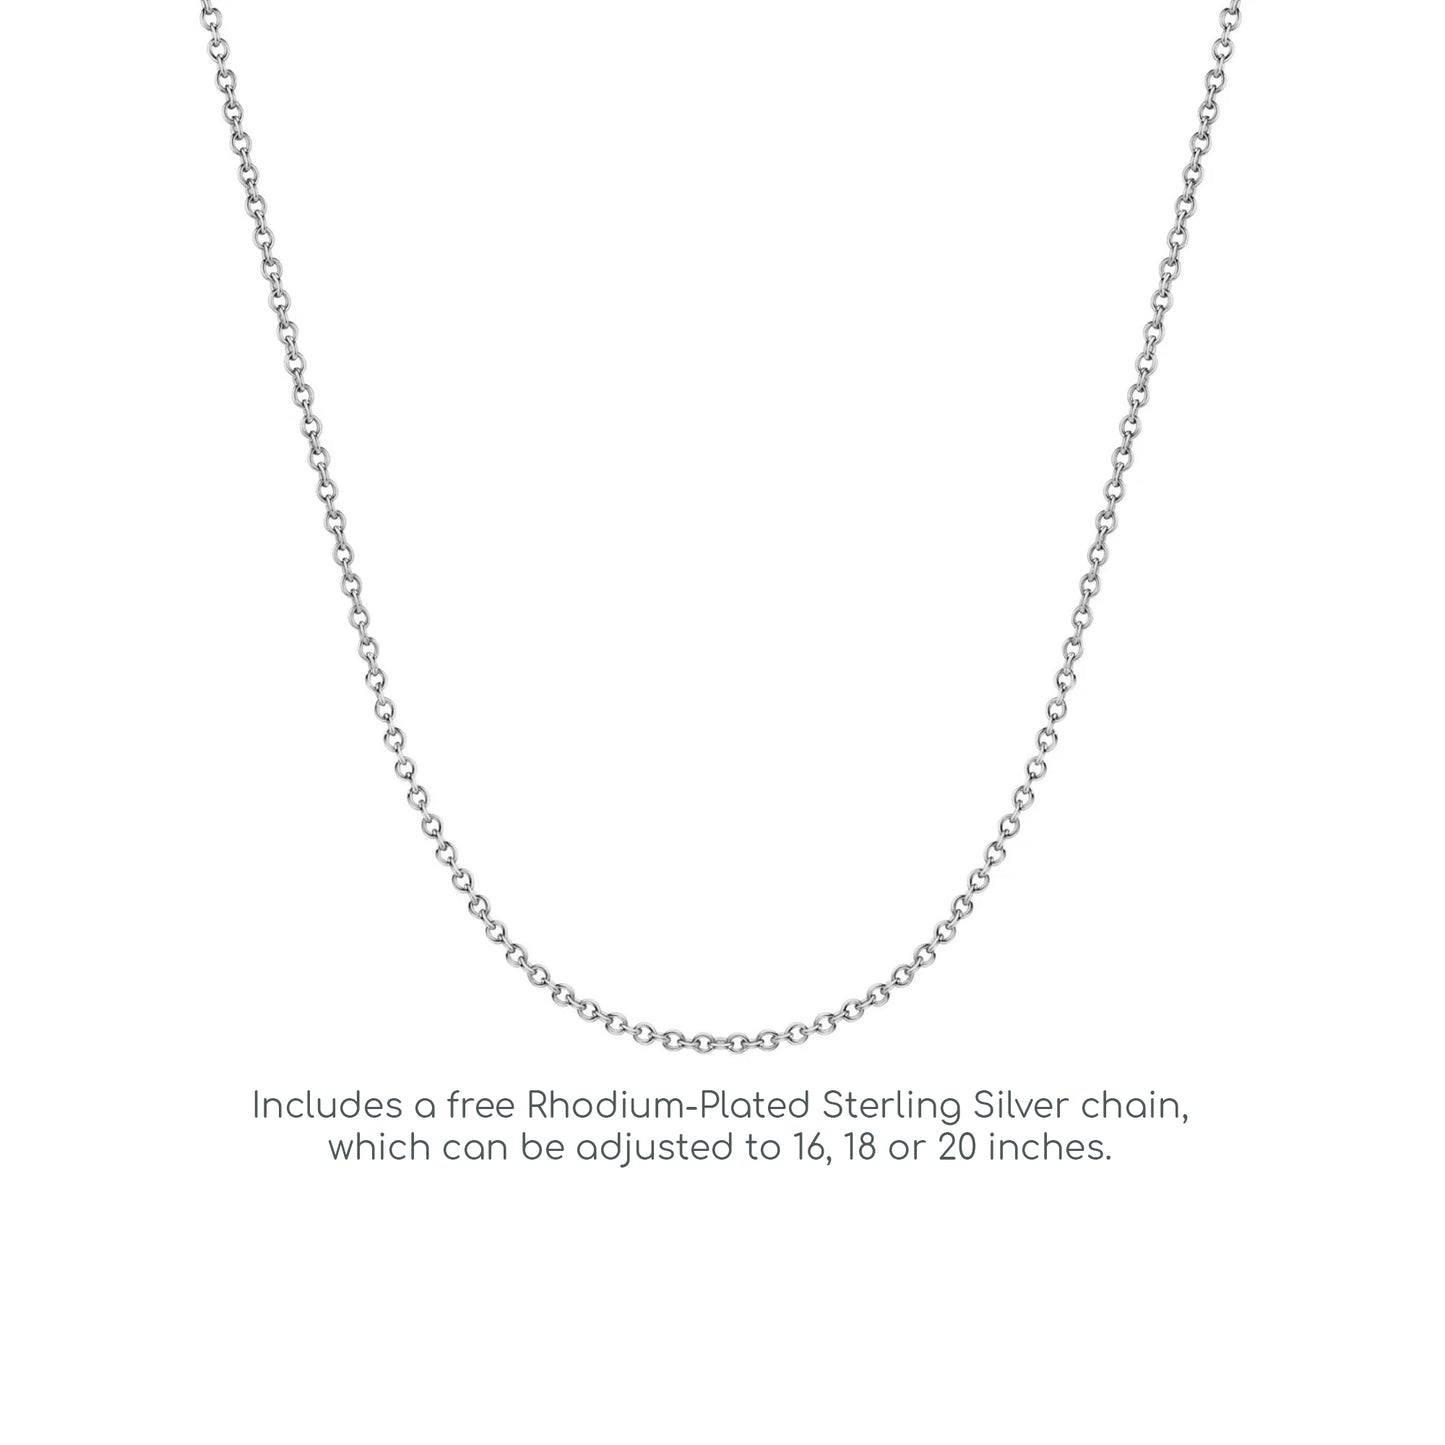 Silver  Shimmering Sunshine Cluster Love Heart Pendant Necklace - GVP650